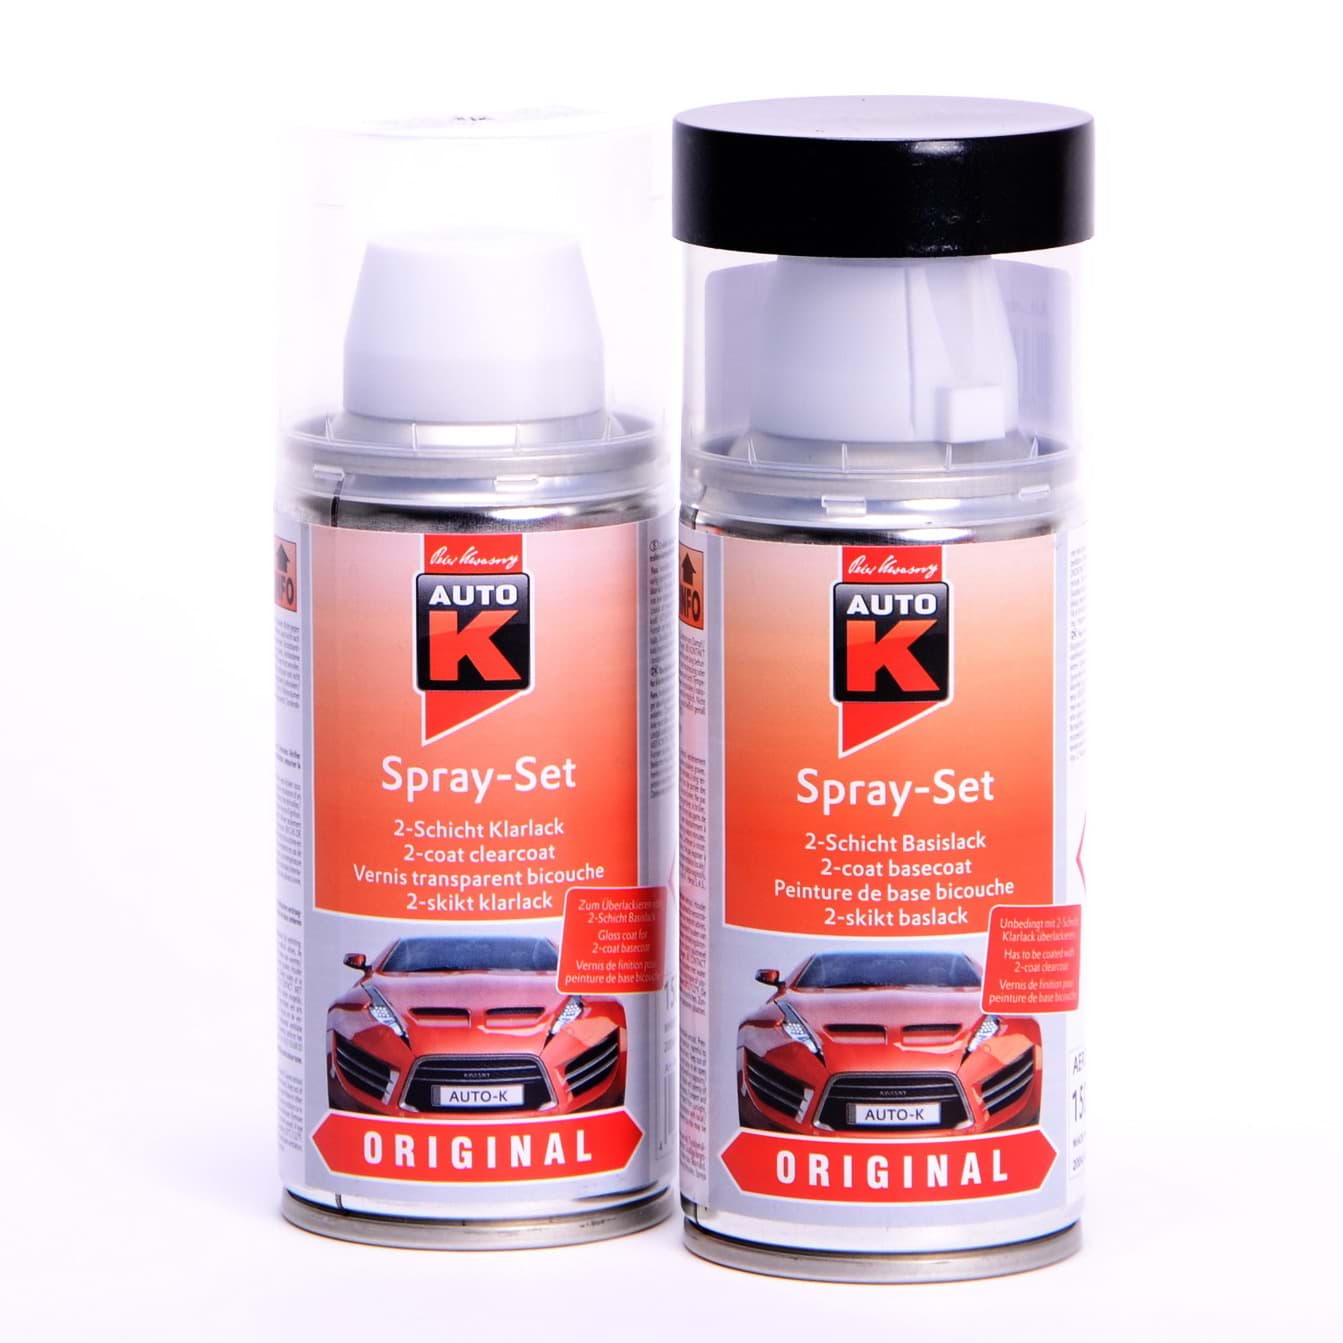 Afbeelding van Auto-K Spray-Set Autolack für Fiat 249 Polarweiss 24694